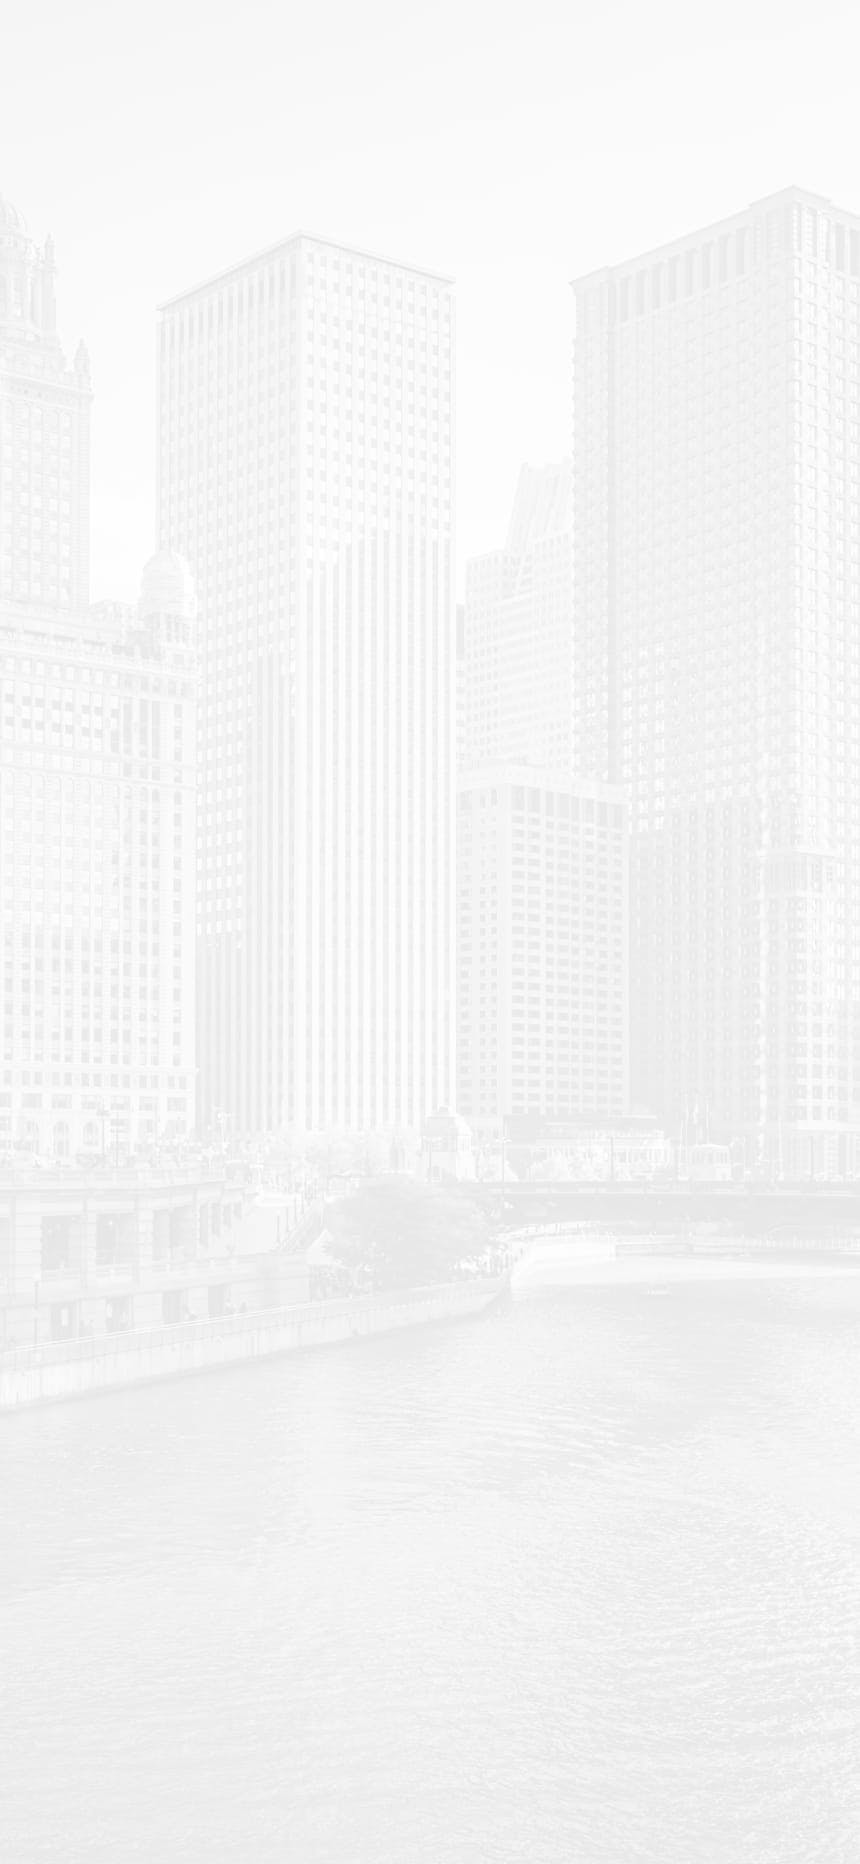 White background image of chicago